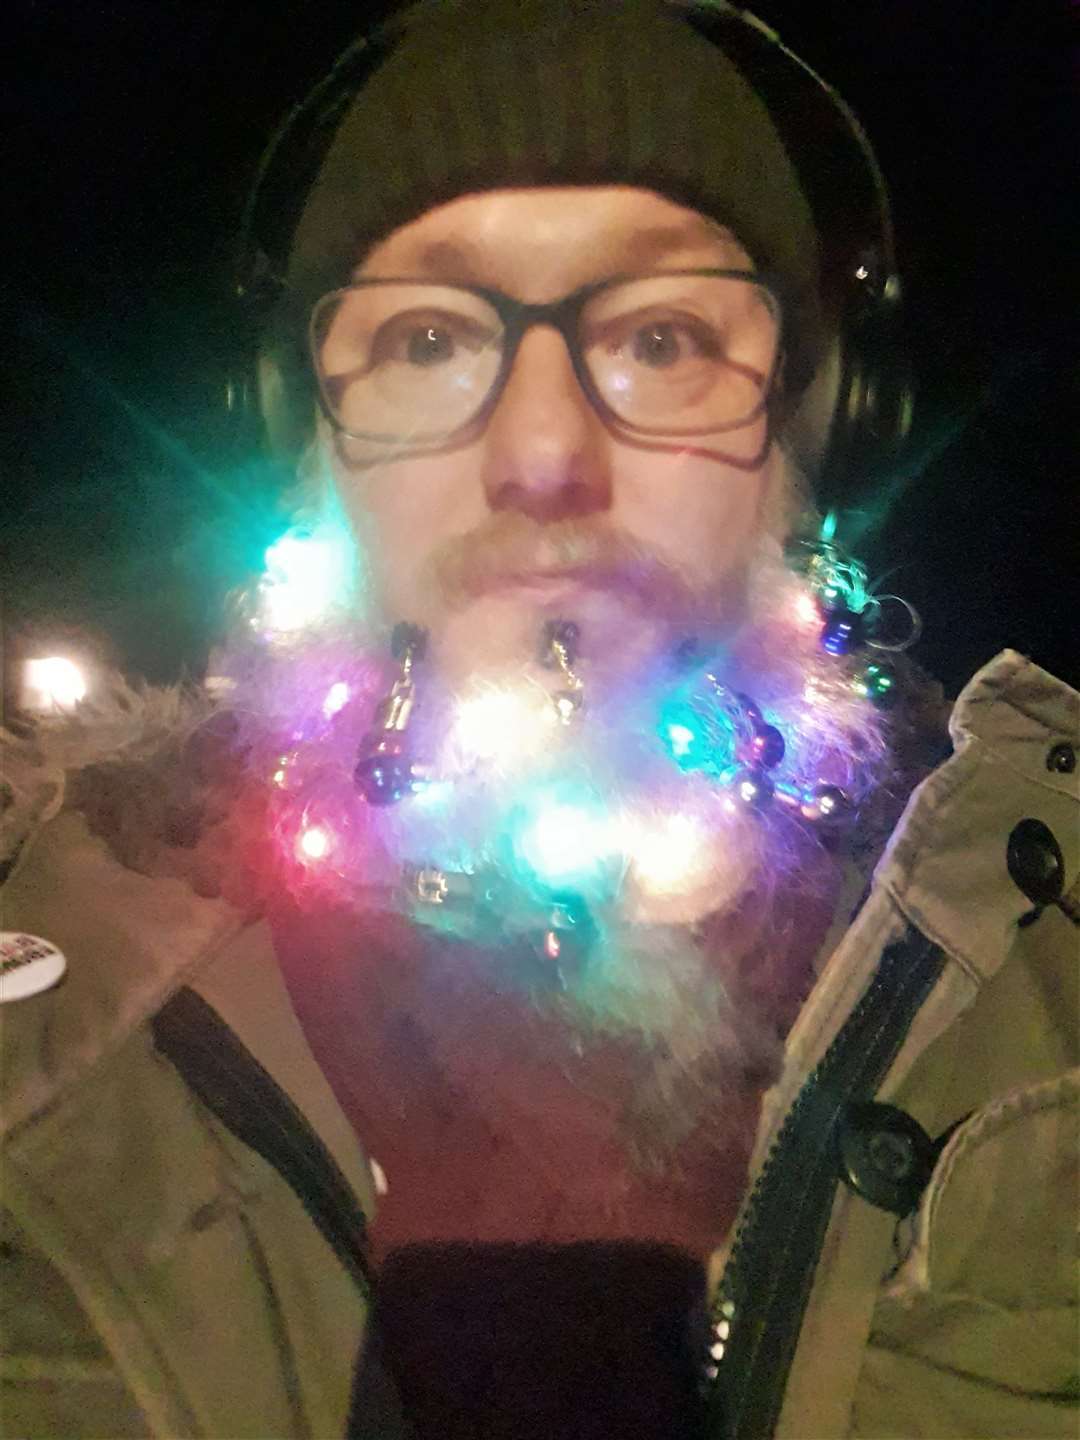 Ryan hangs Christmas lights from his beard.